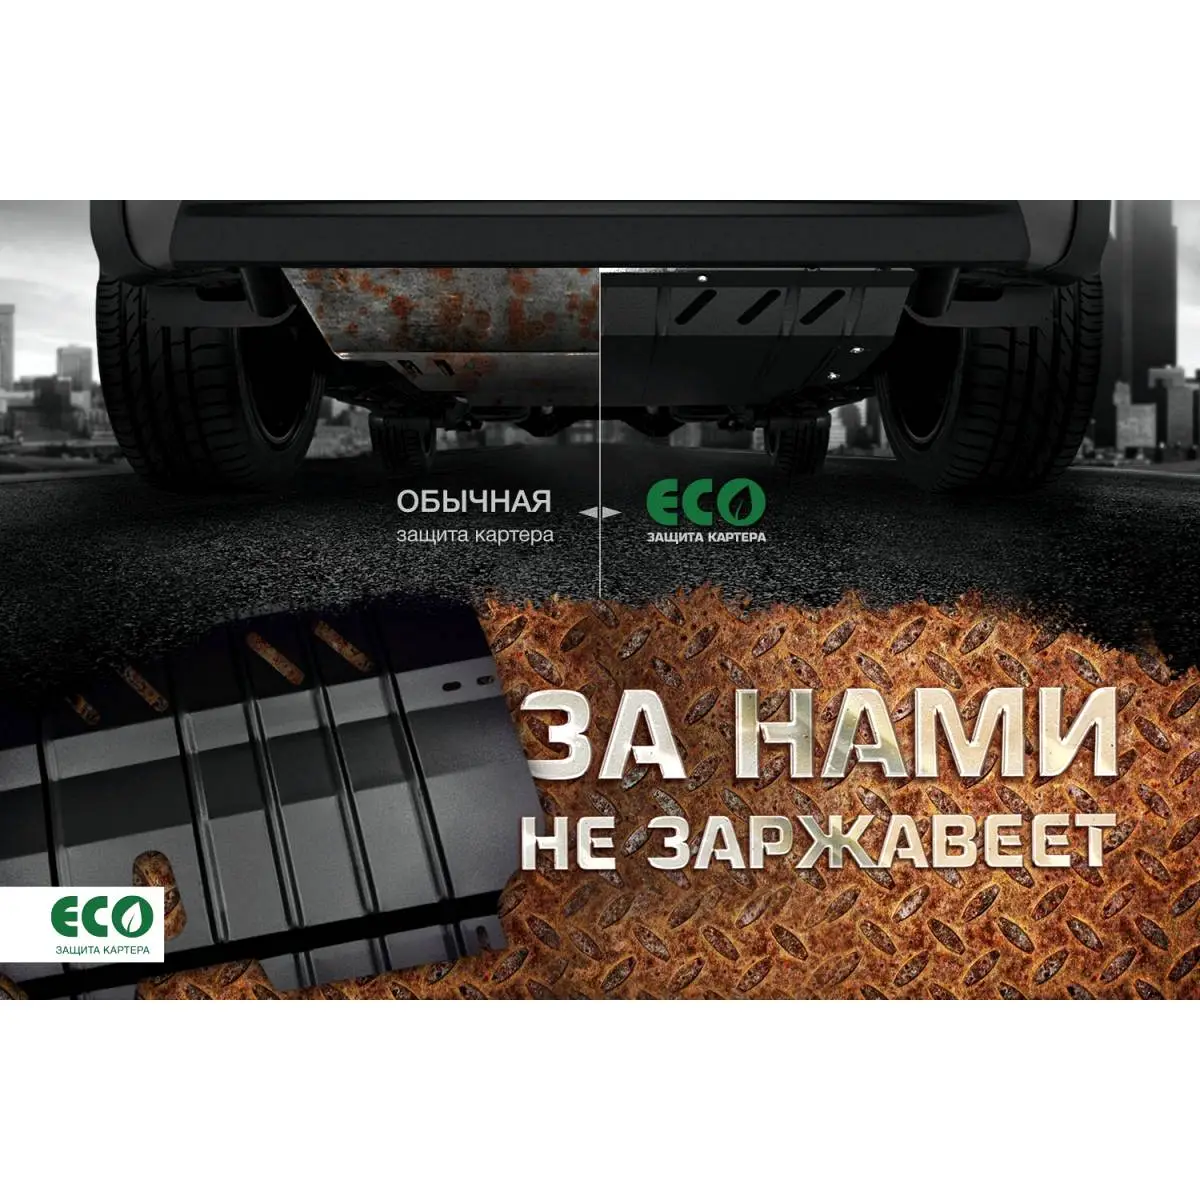 Комплект защиты картера и крепеж Eco GQRYU RS4J D eco3531020 1437099112 изображение 7